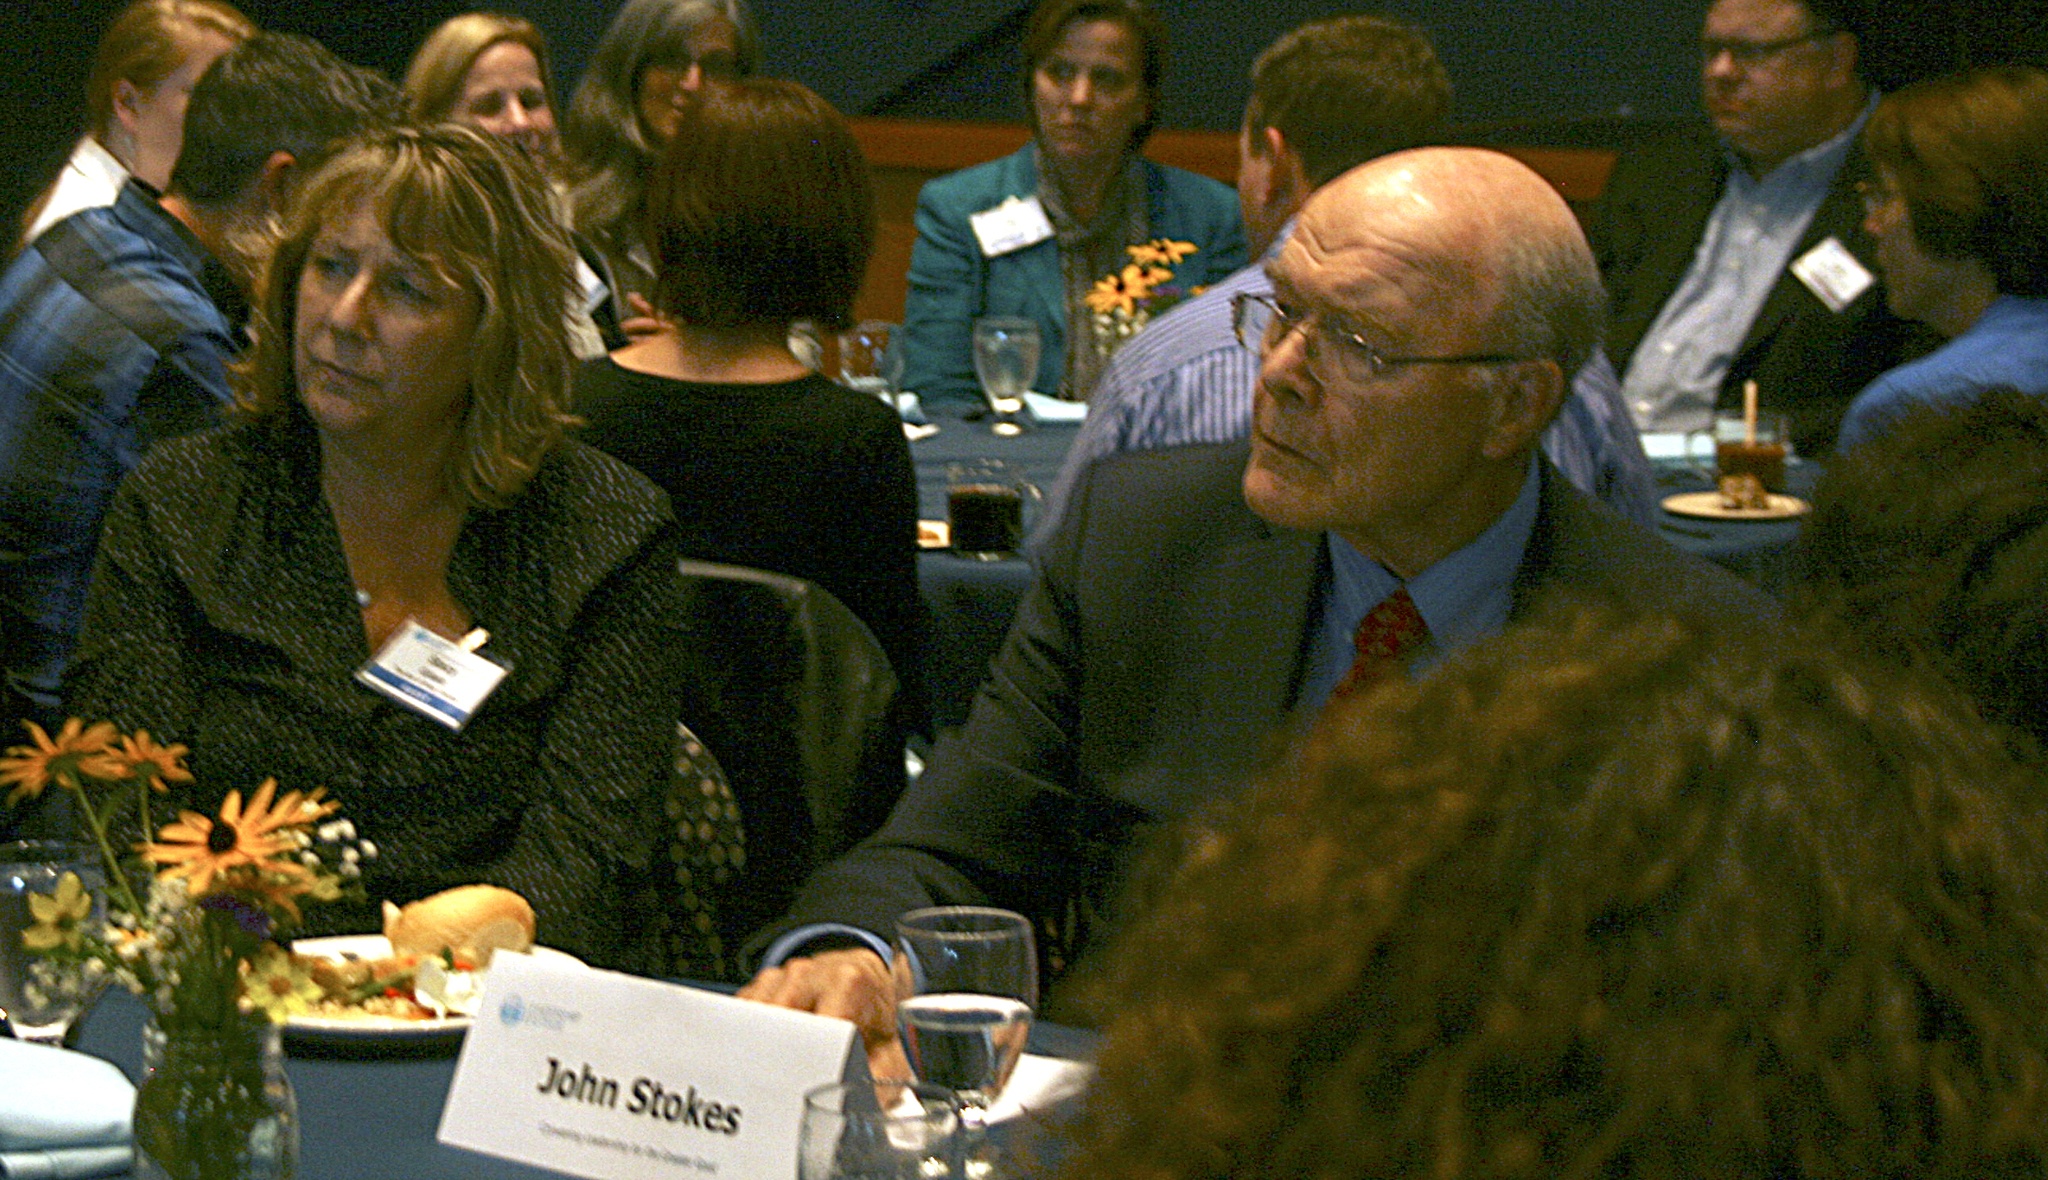 Bellevue Mayor John Stokes looks on during an event on Sept. 9